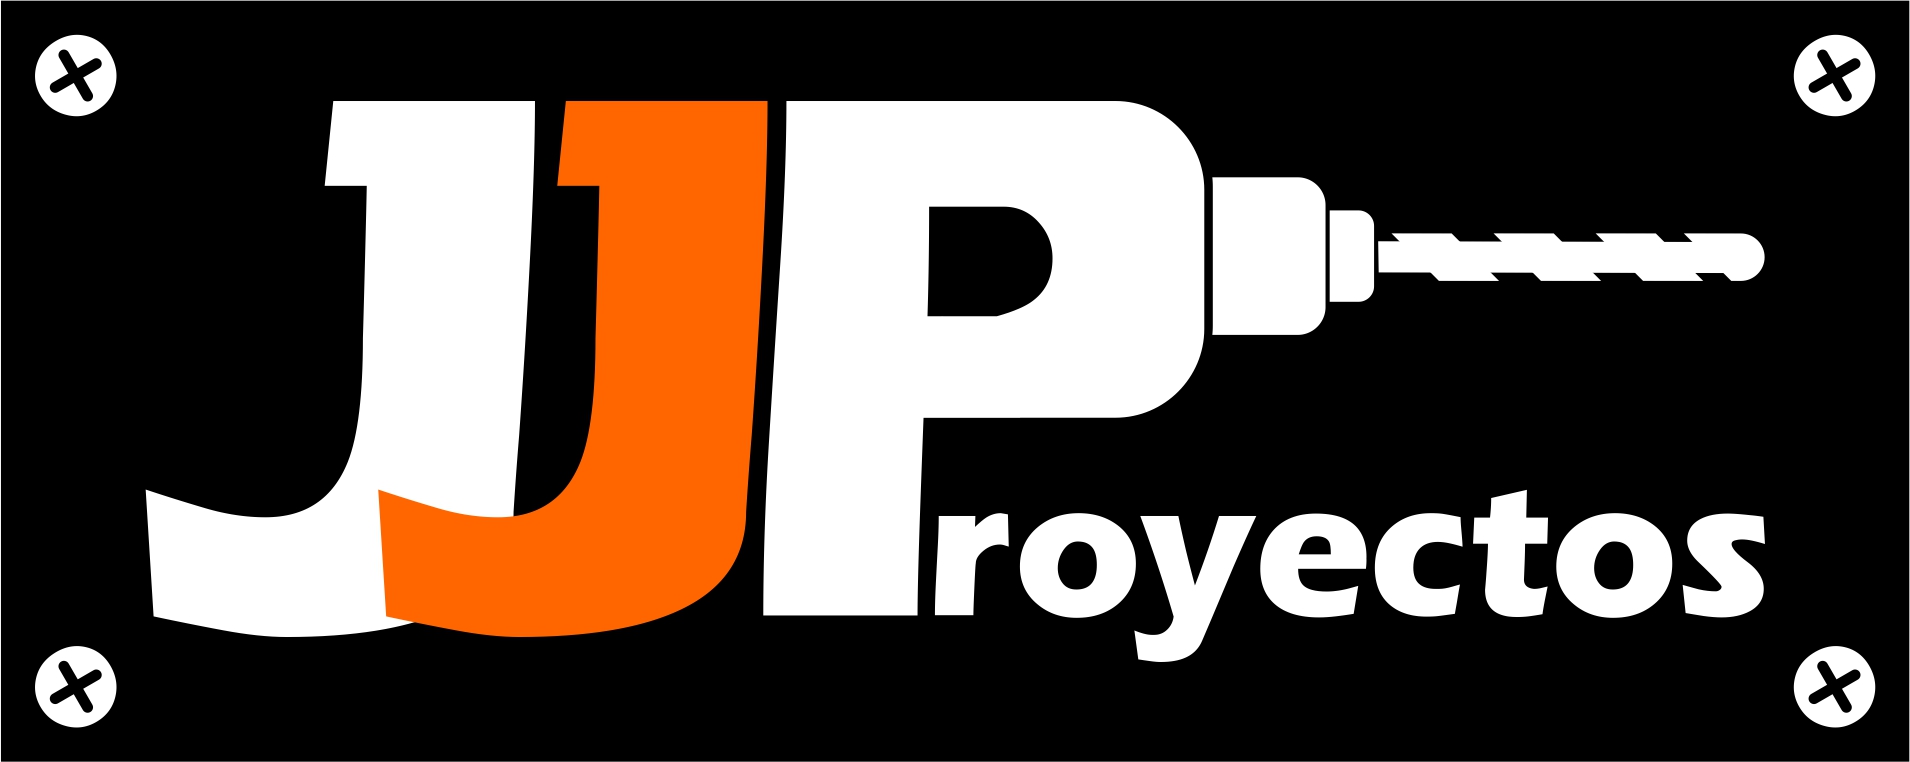 Logo JJProyectos2.jpg